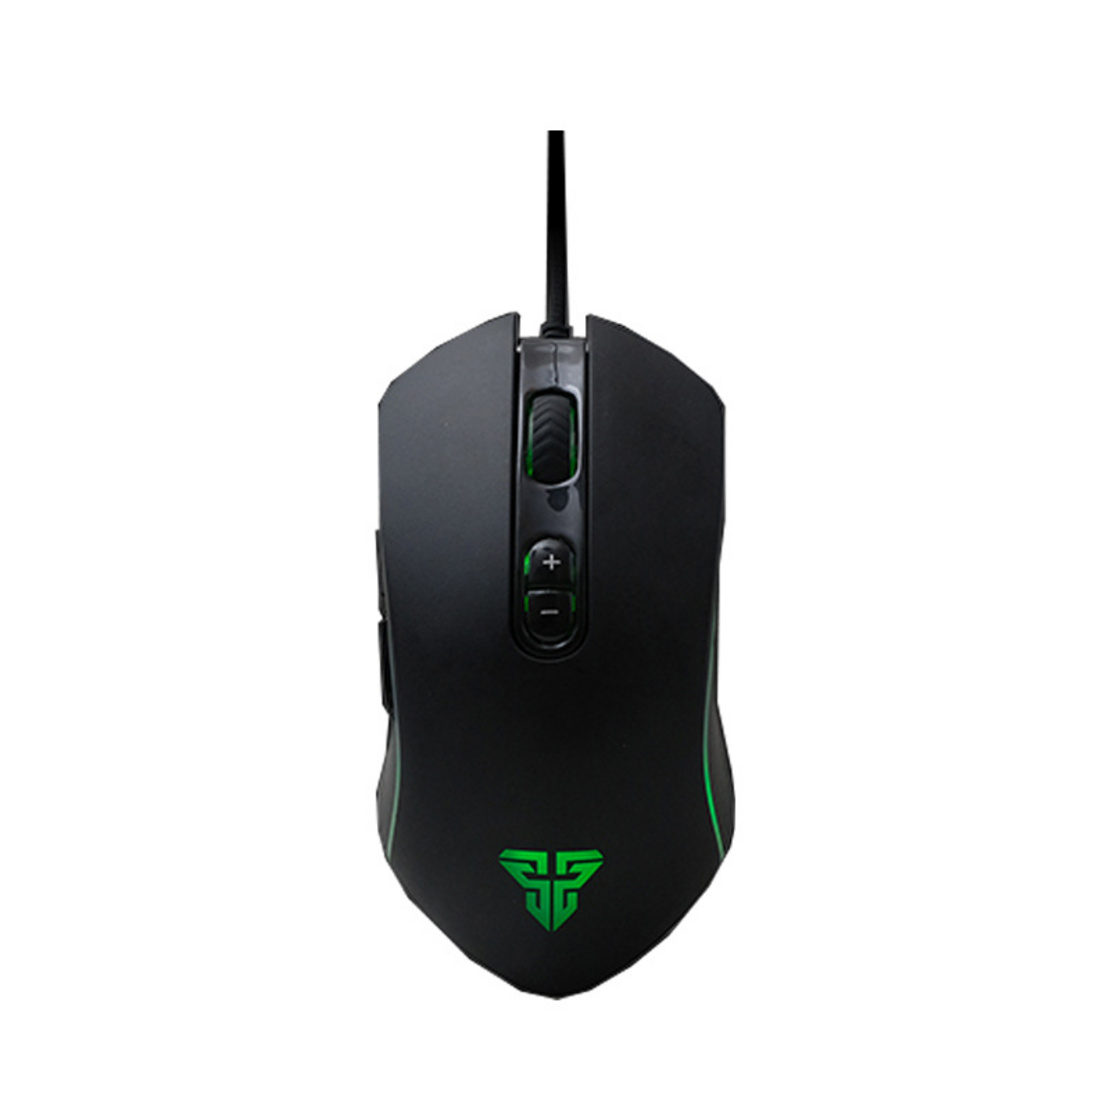  Fantech  Gaming  Mouse  Thor  X9  MACRO BLACK ShopAt24 com